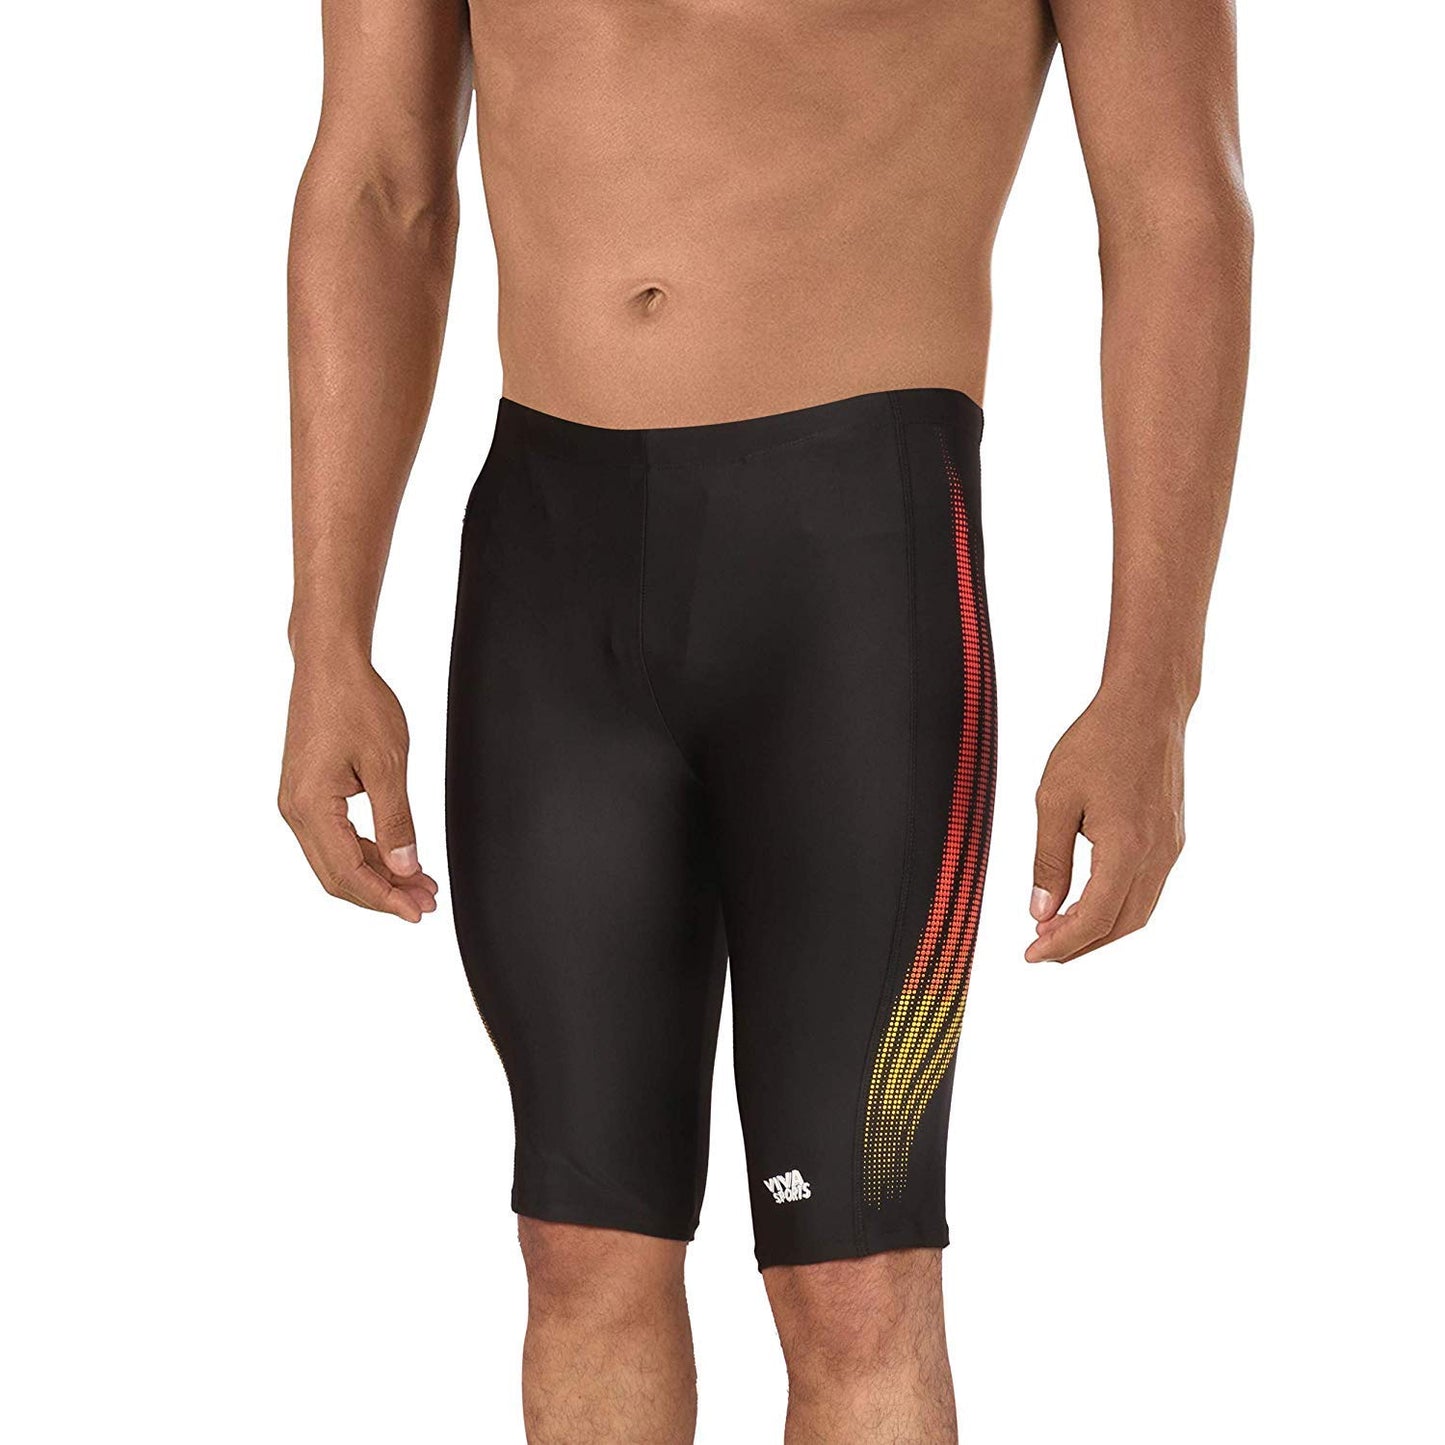 Viva Sports Swimwear Swimming Shorts Jammer for Men, Black/Red/Yellow - Best Price online Prokicksports.com